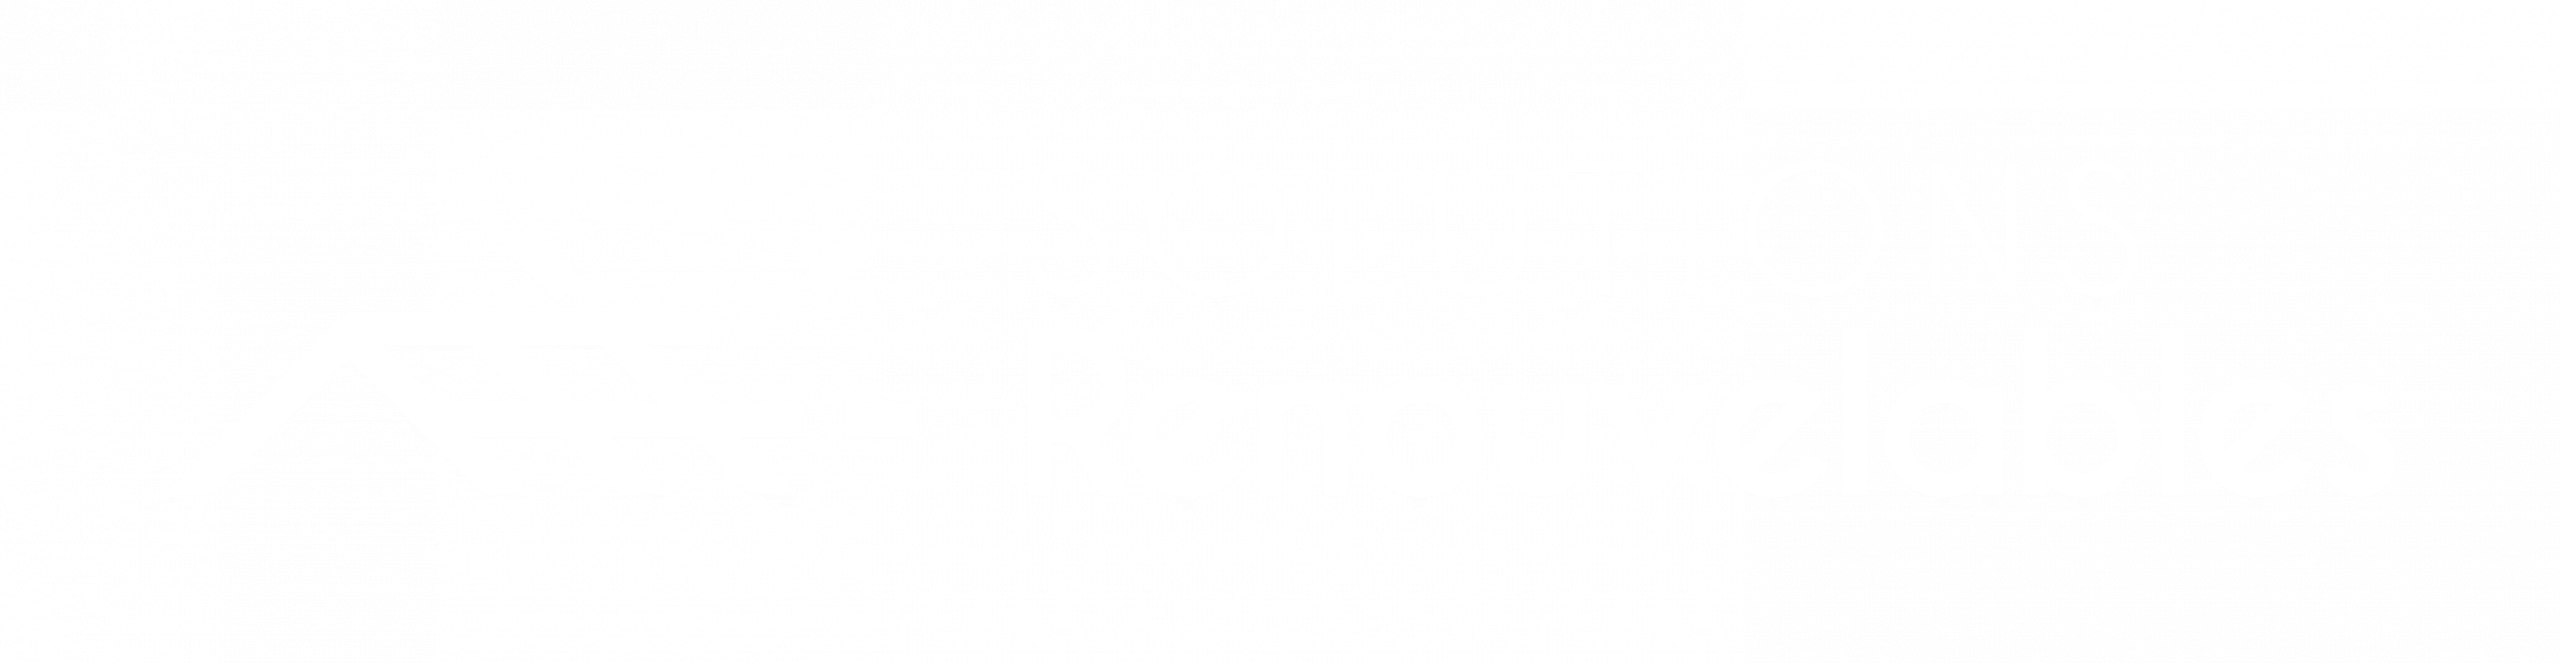 logo solutions renouvelables